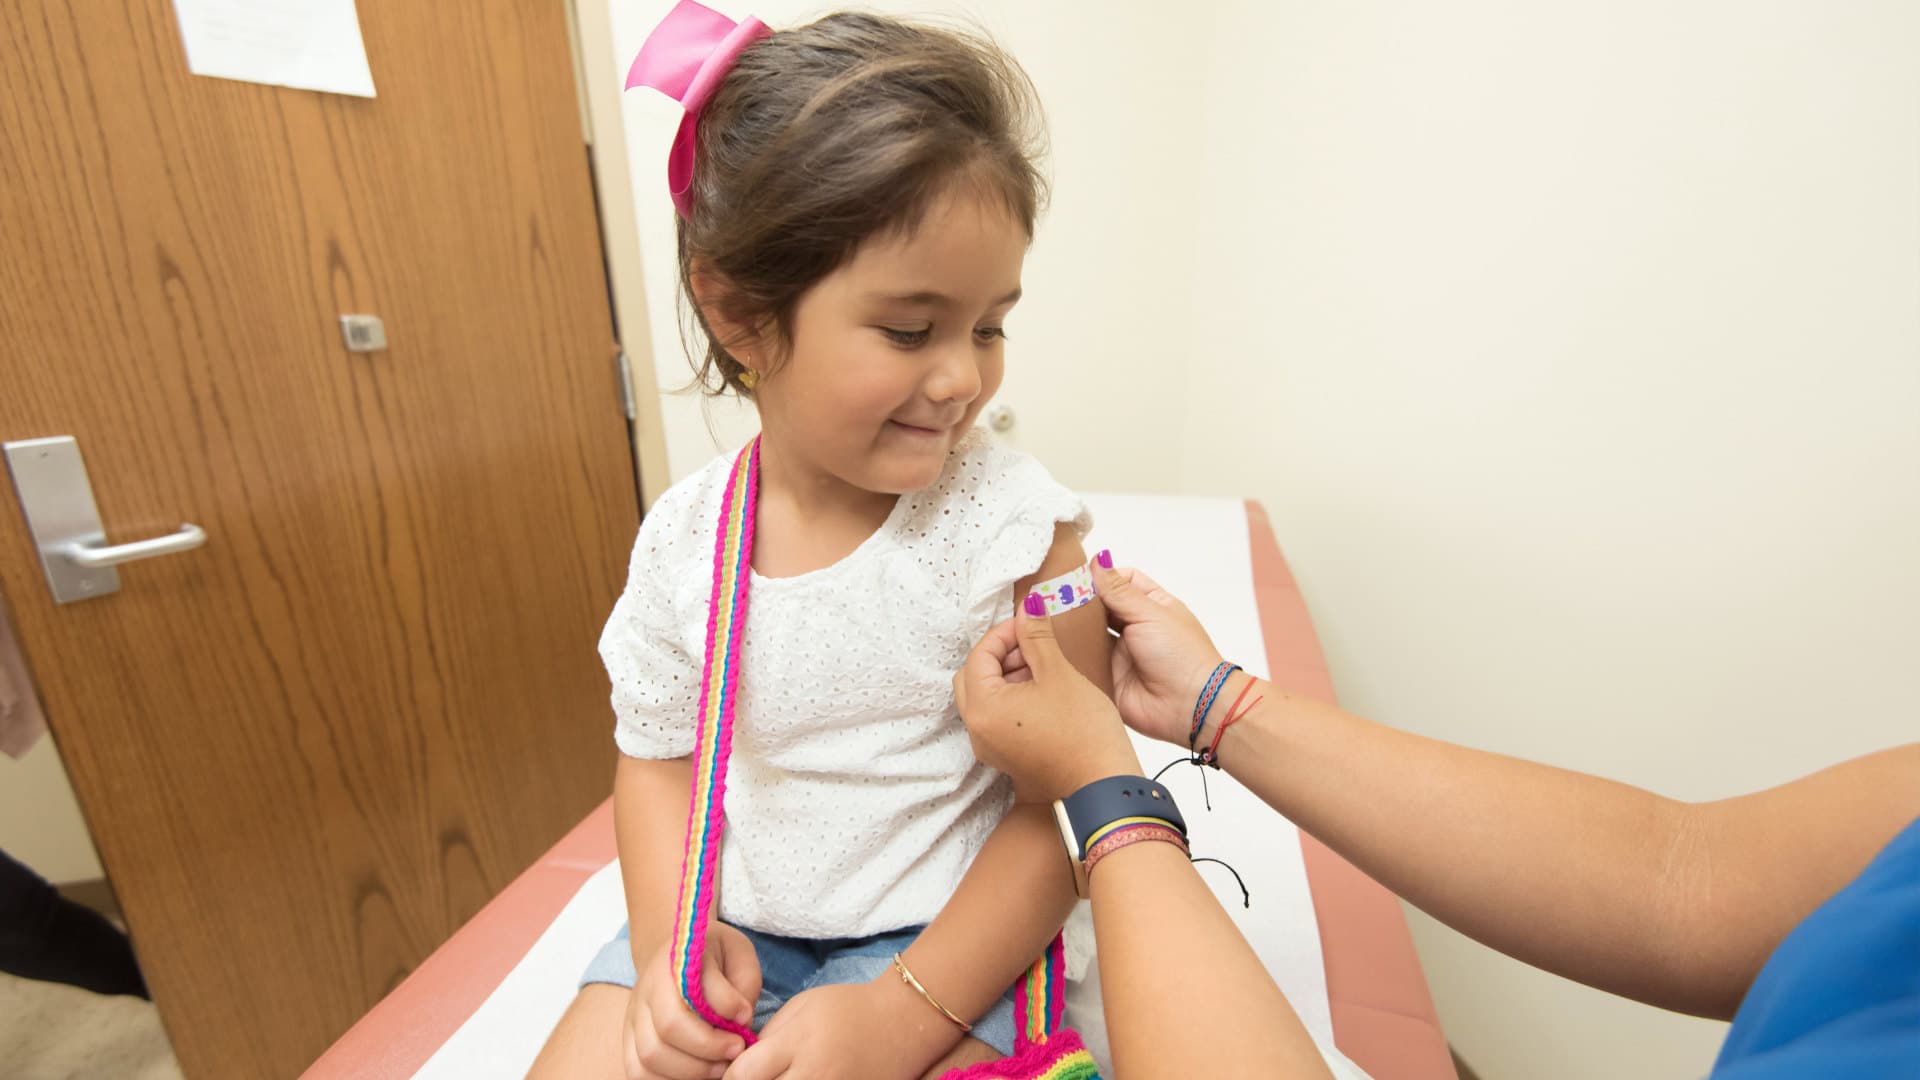 A child receives their seasonal influenza vaccine.